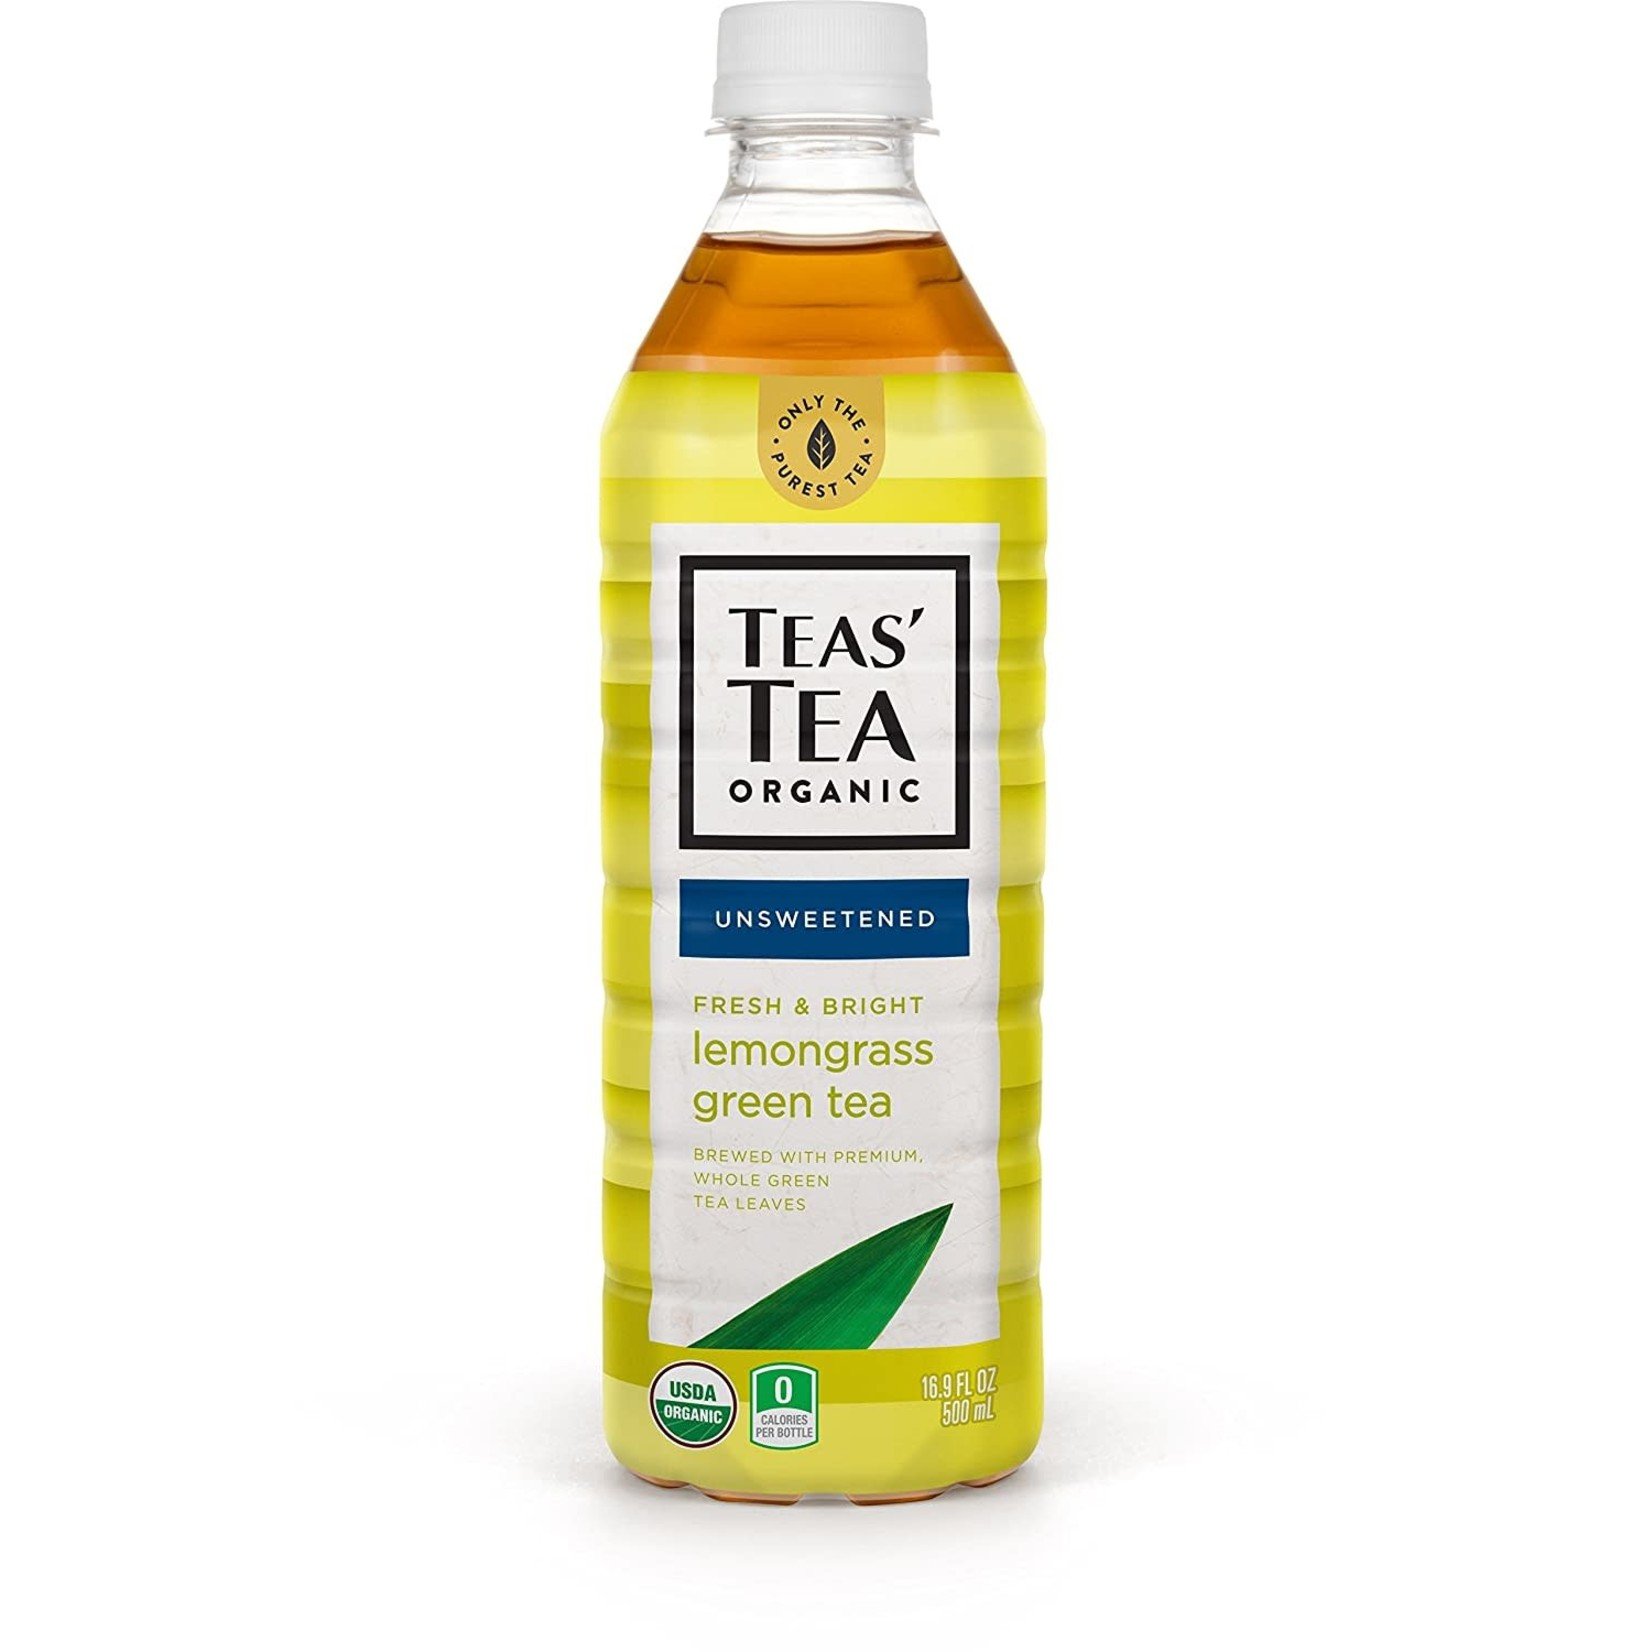 Ito En Teas' Tea Organic Lemongrass Green Tea 500ml